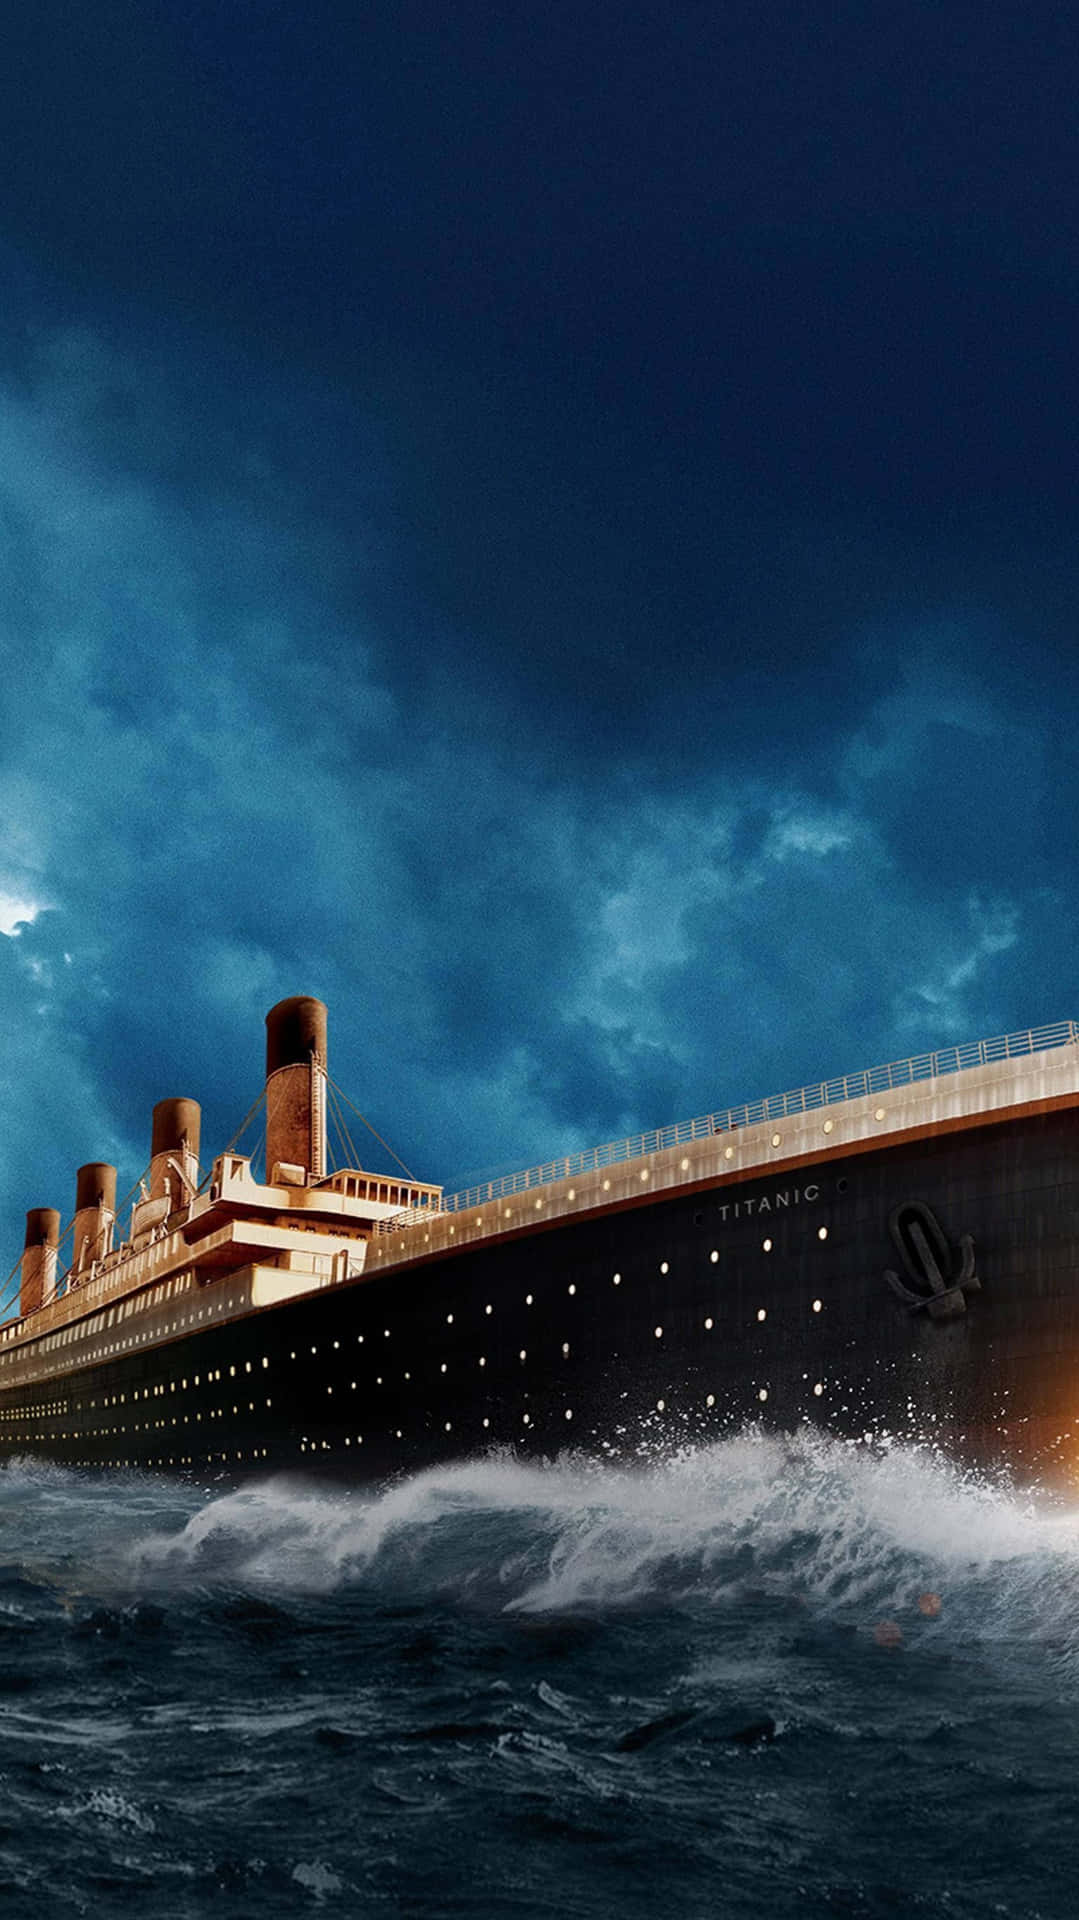 The majesty of Titanic